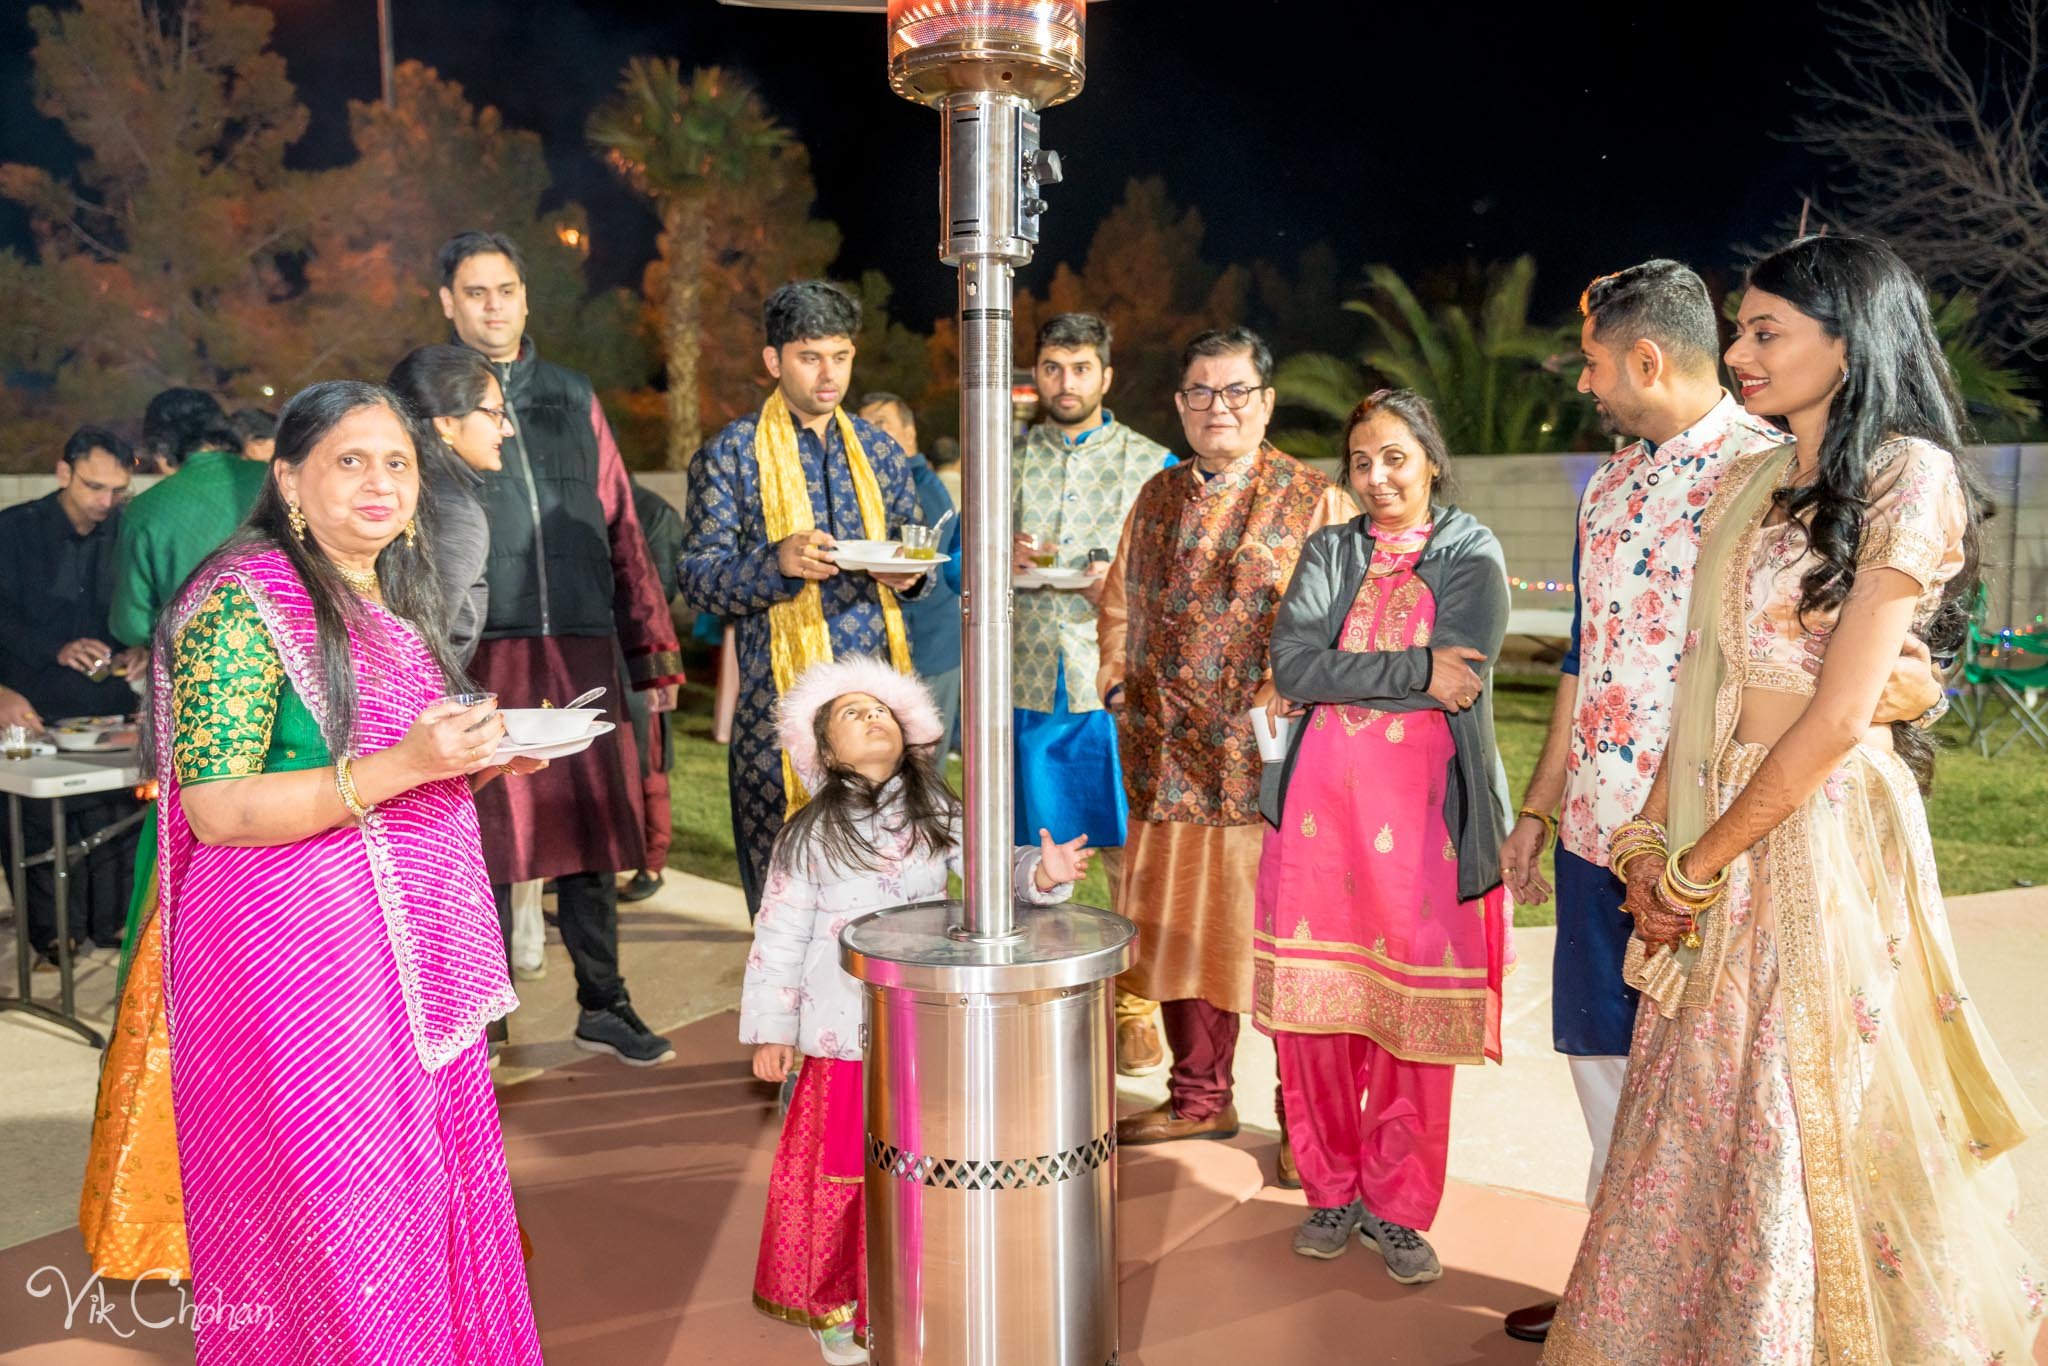 2022-02-04-Hely-&-Parth-Garba-Night-Indian-Wedding-Vik-Chohan-Photography-Photo-Booth-Social-Media-VCP-065.jpg